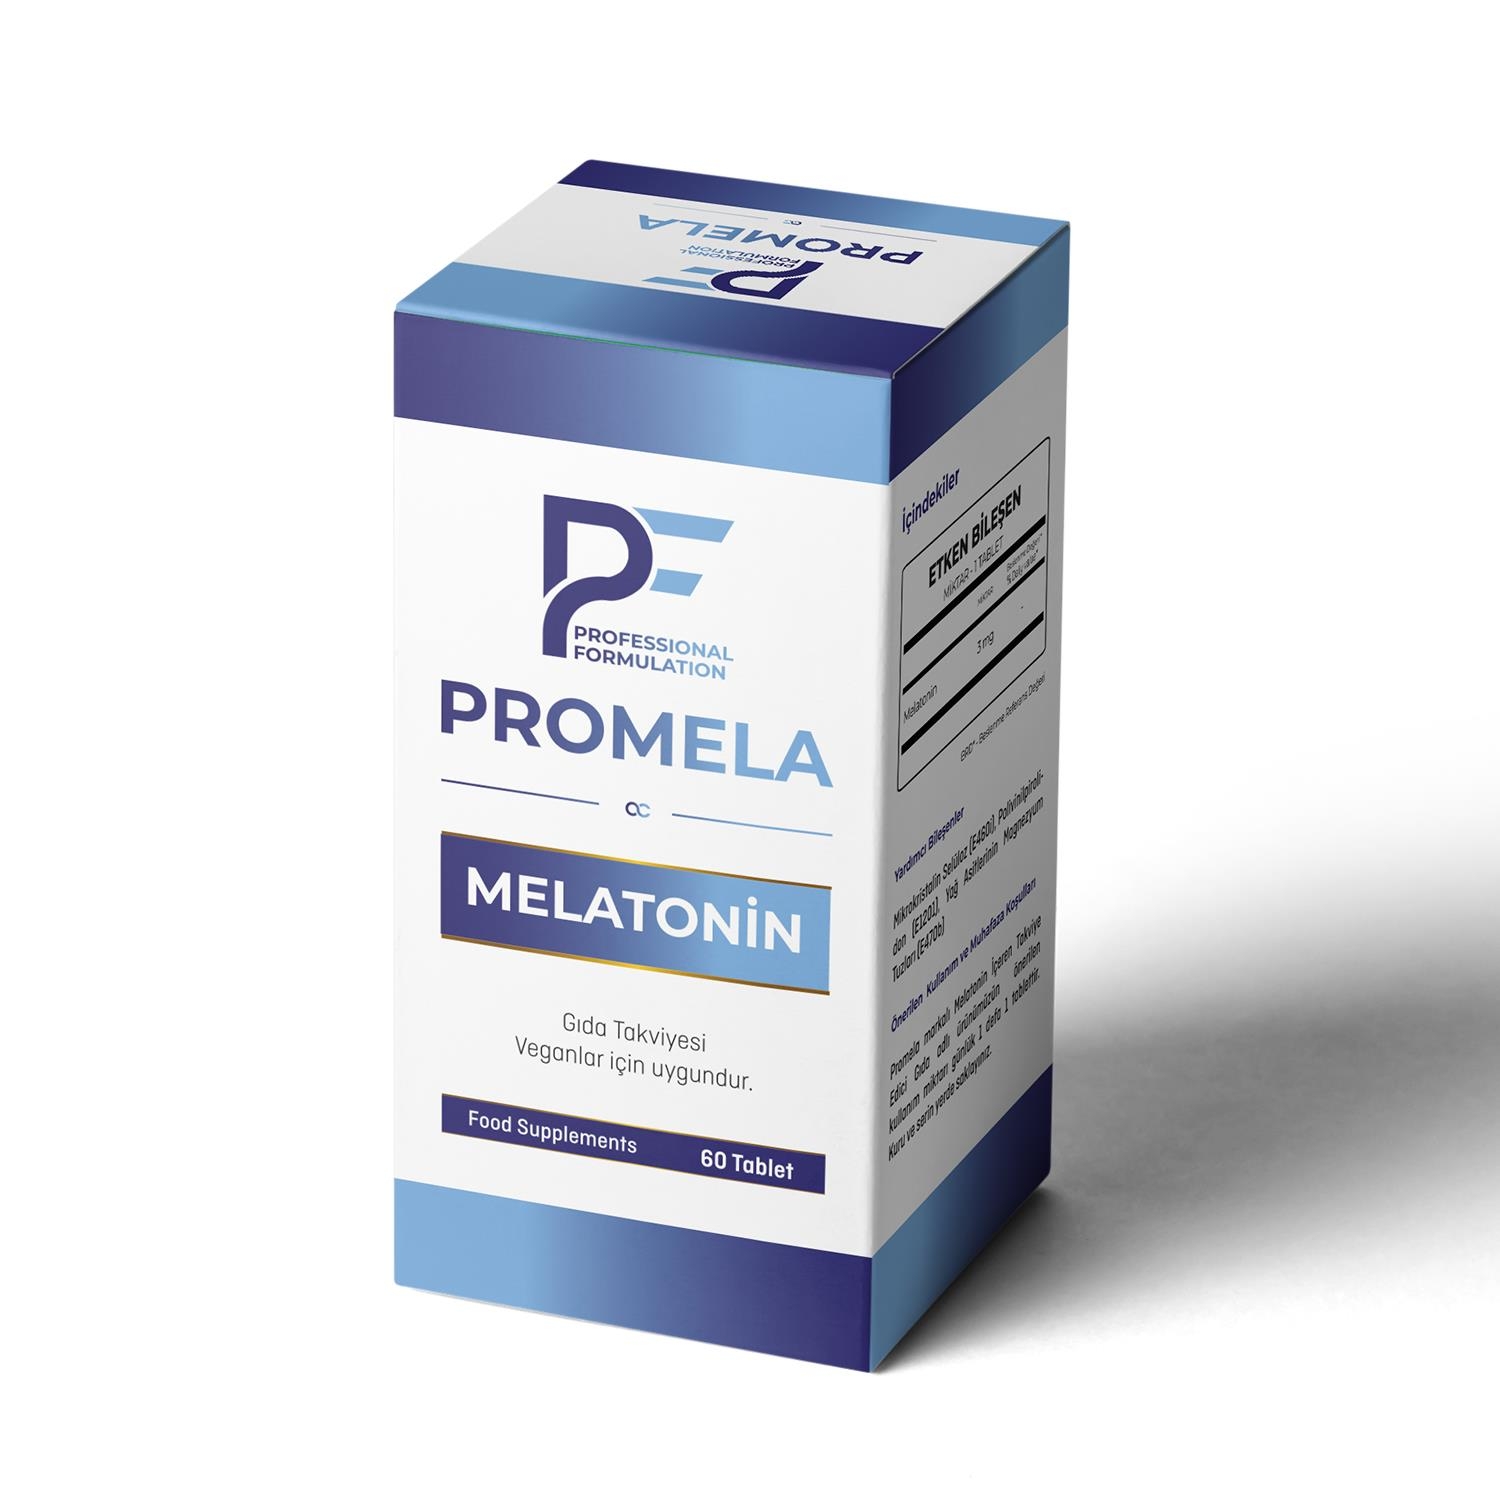 PF ProMela Melatonin İçeren Gıda Takviyesi 60 Tablet - 3